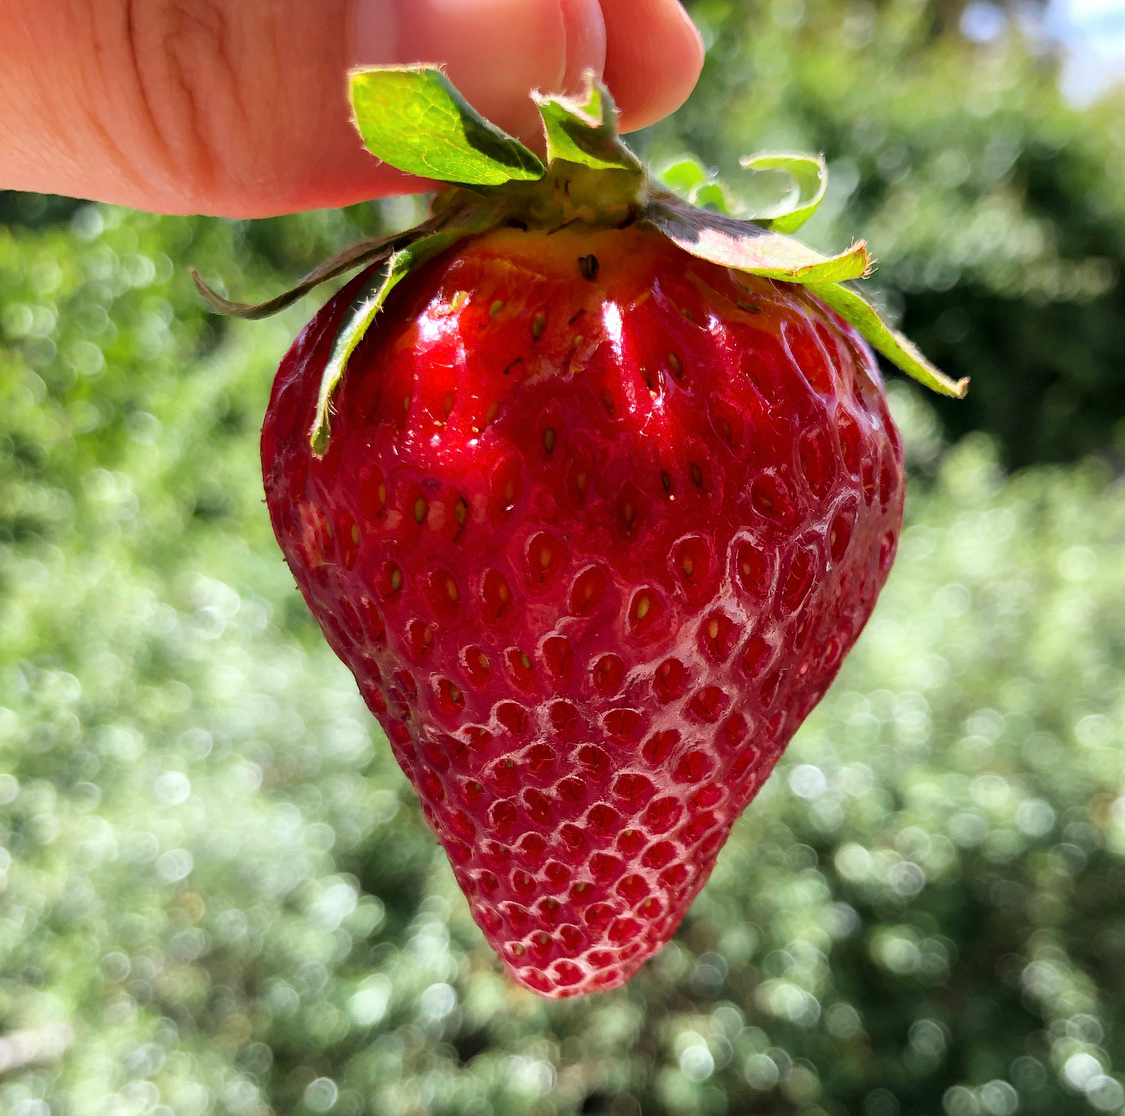 Local, organic strawberry from Coke Farms